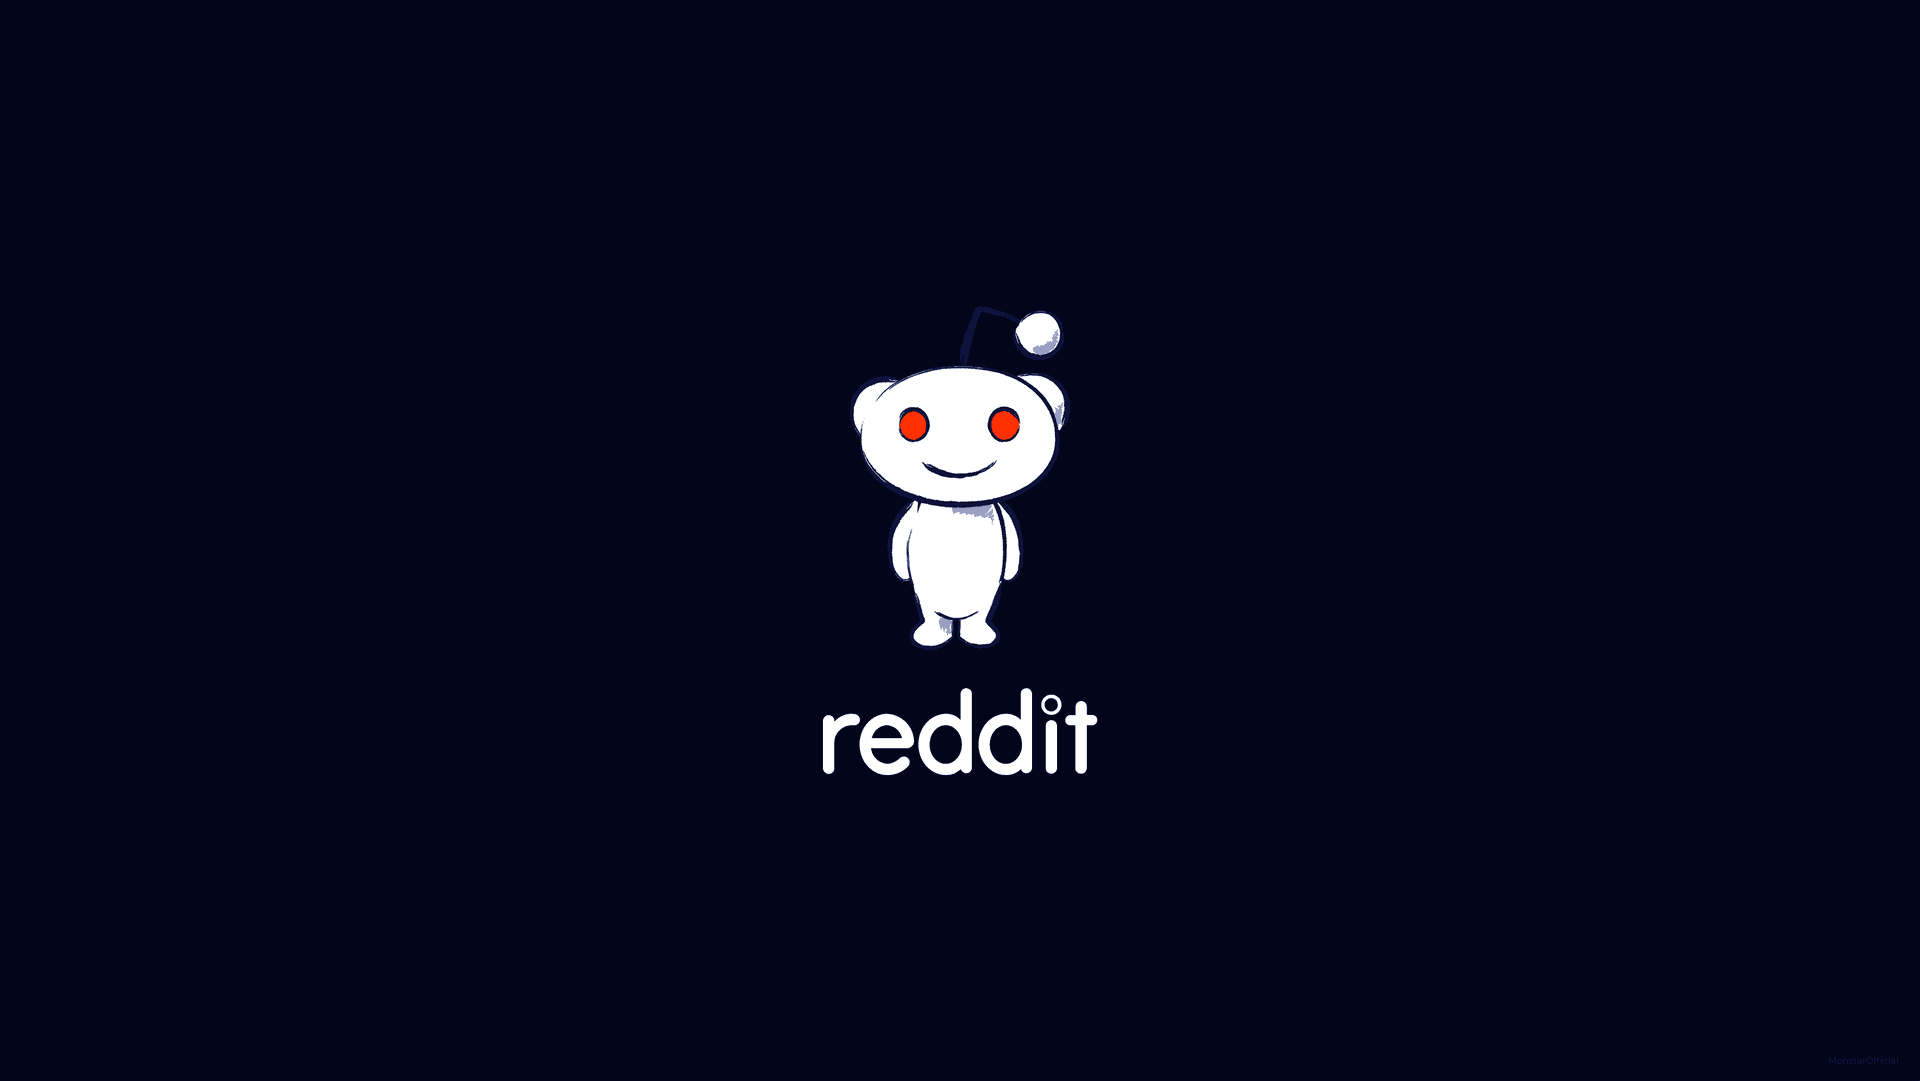 Reddit Background Wallpaper